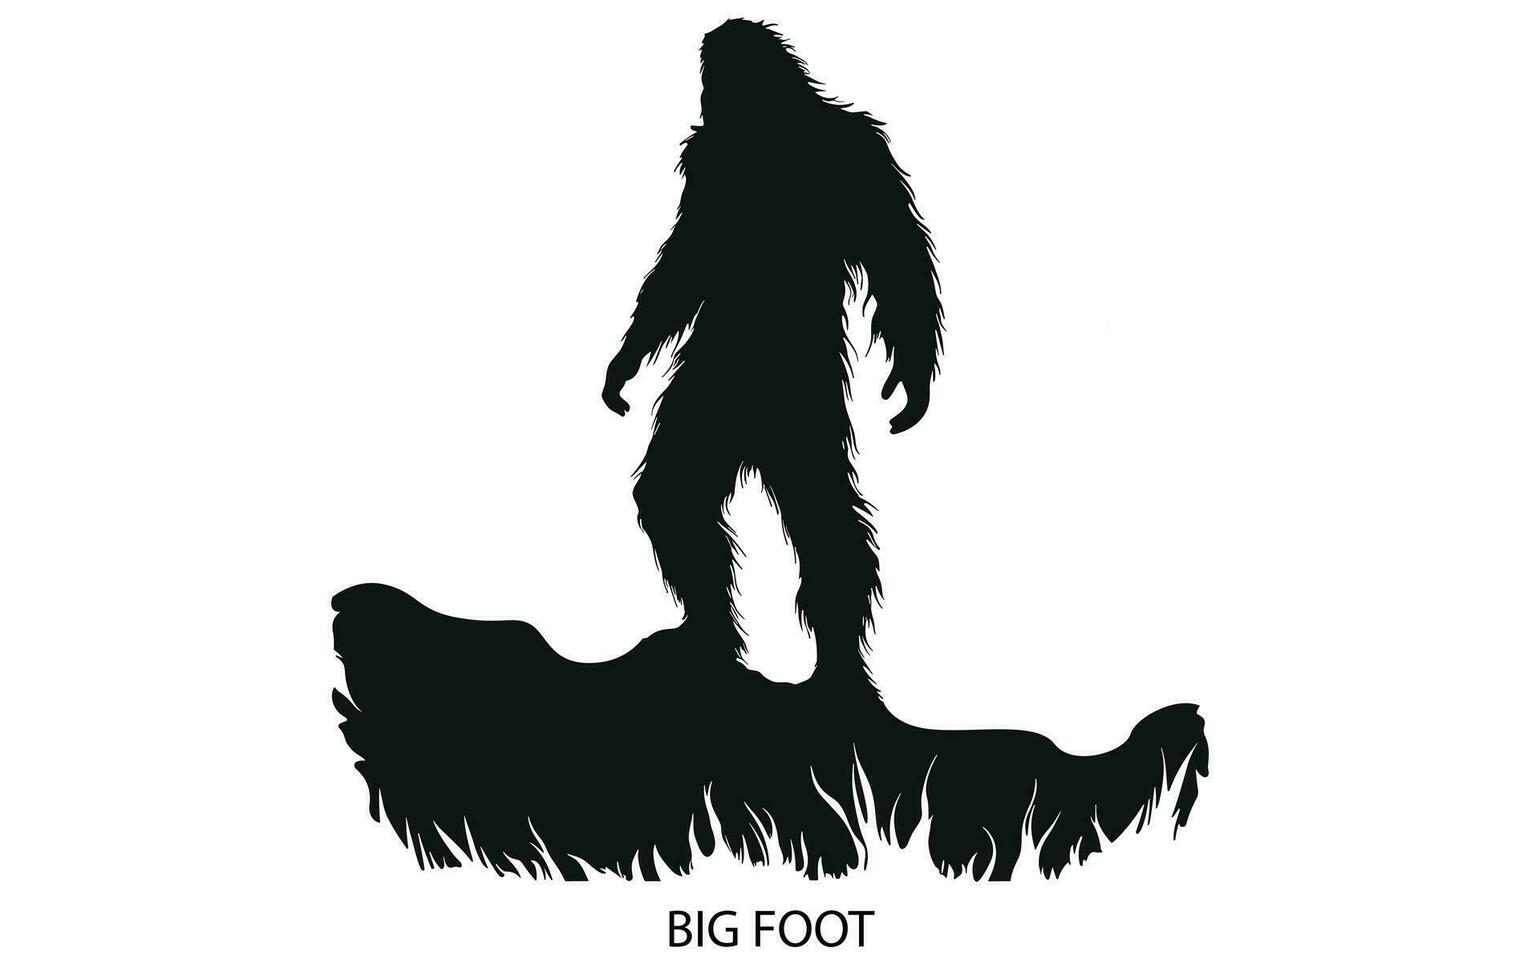 grote voet silhouet vector illustratie.big voet yeti logo icoon ontwerp